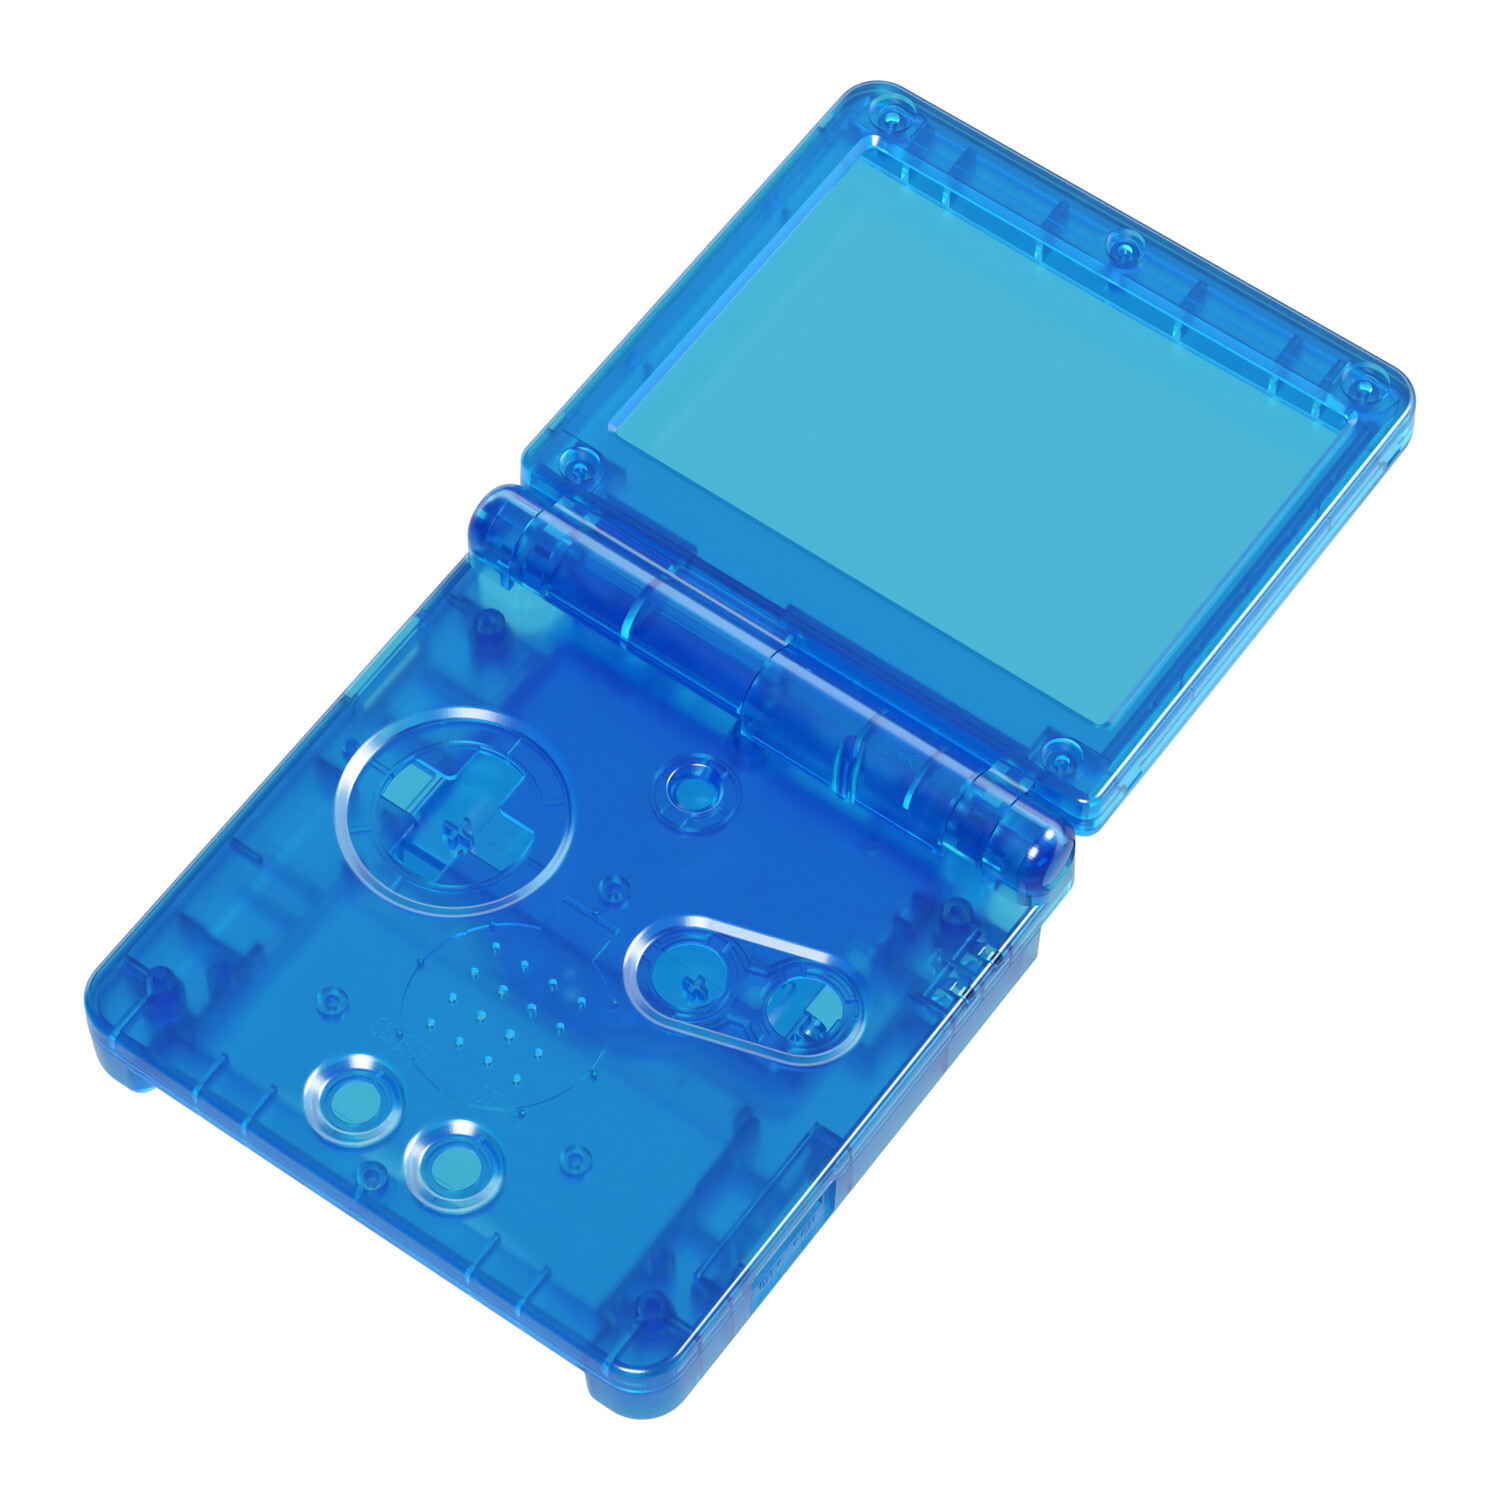 Game Boy Advance SP Gehäuse (Clear Blue)